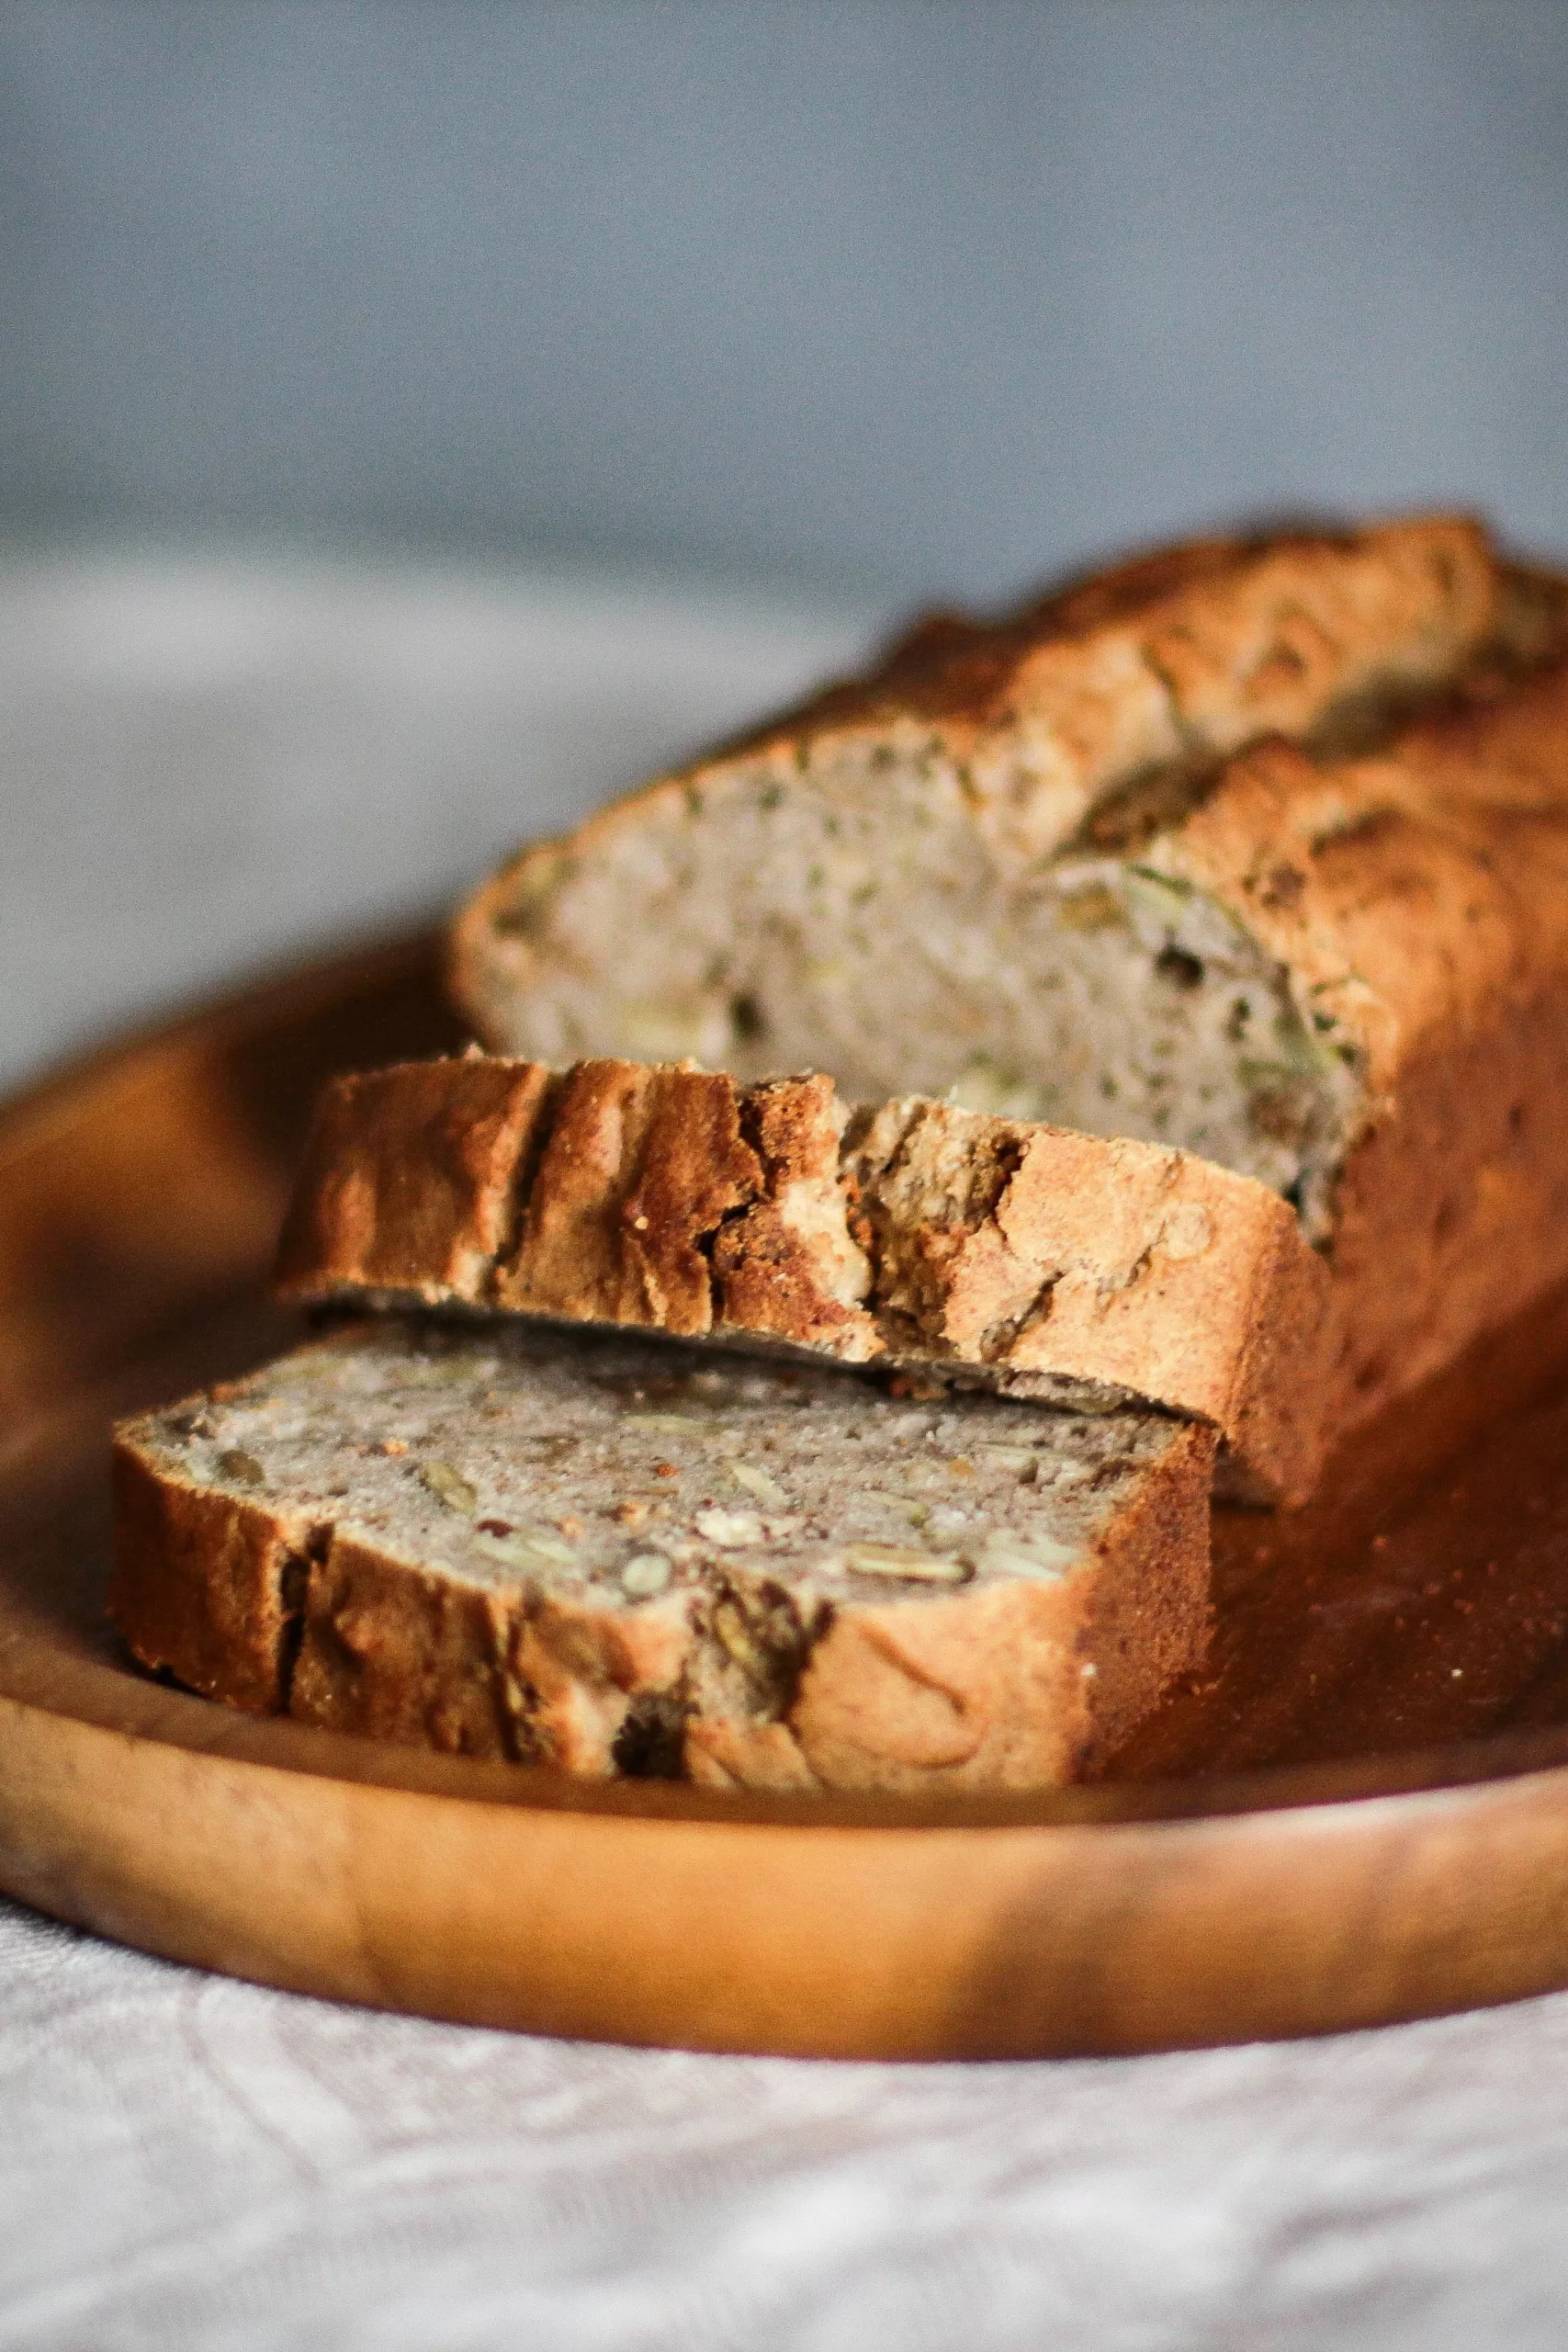 Vegan Zucchini Bread Recipe